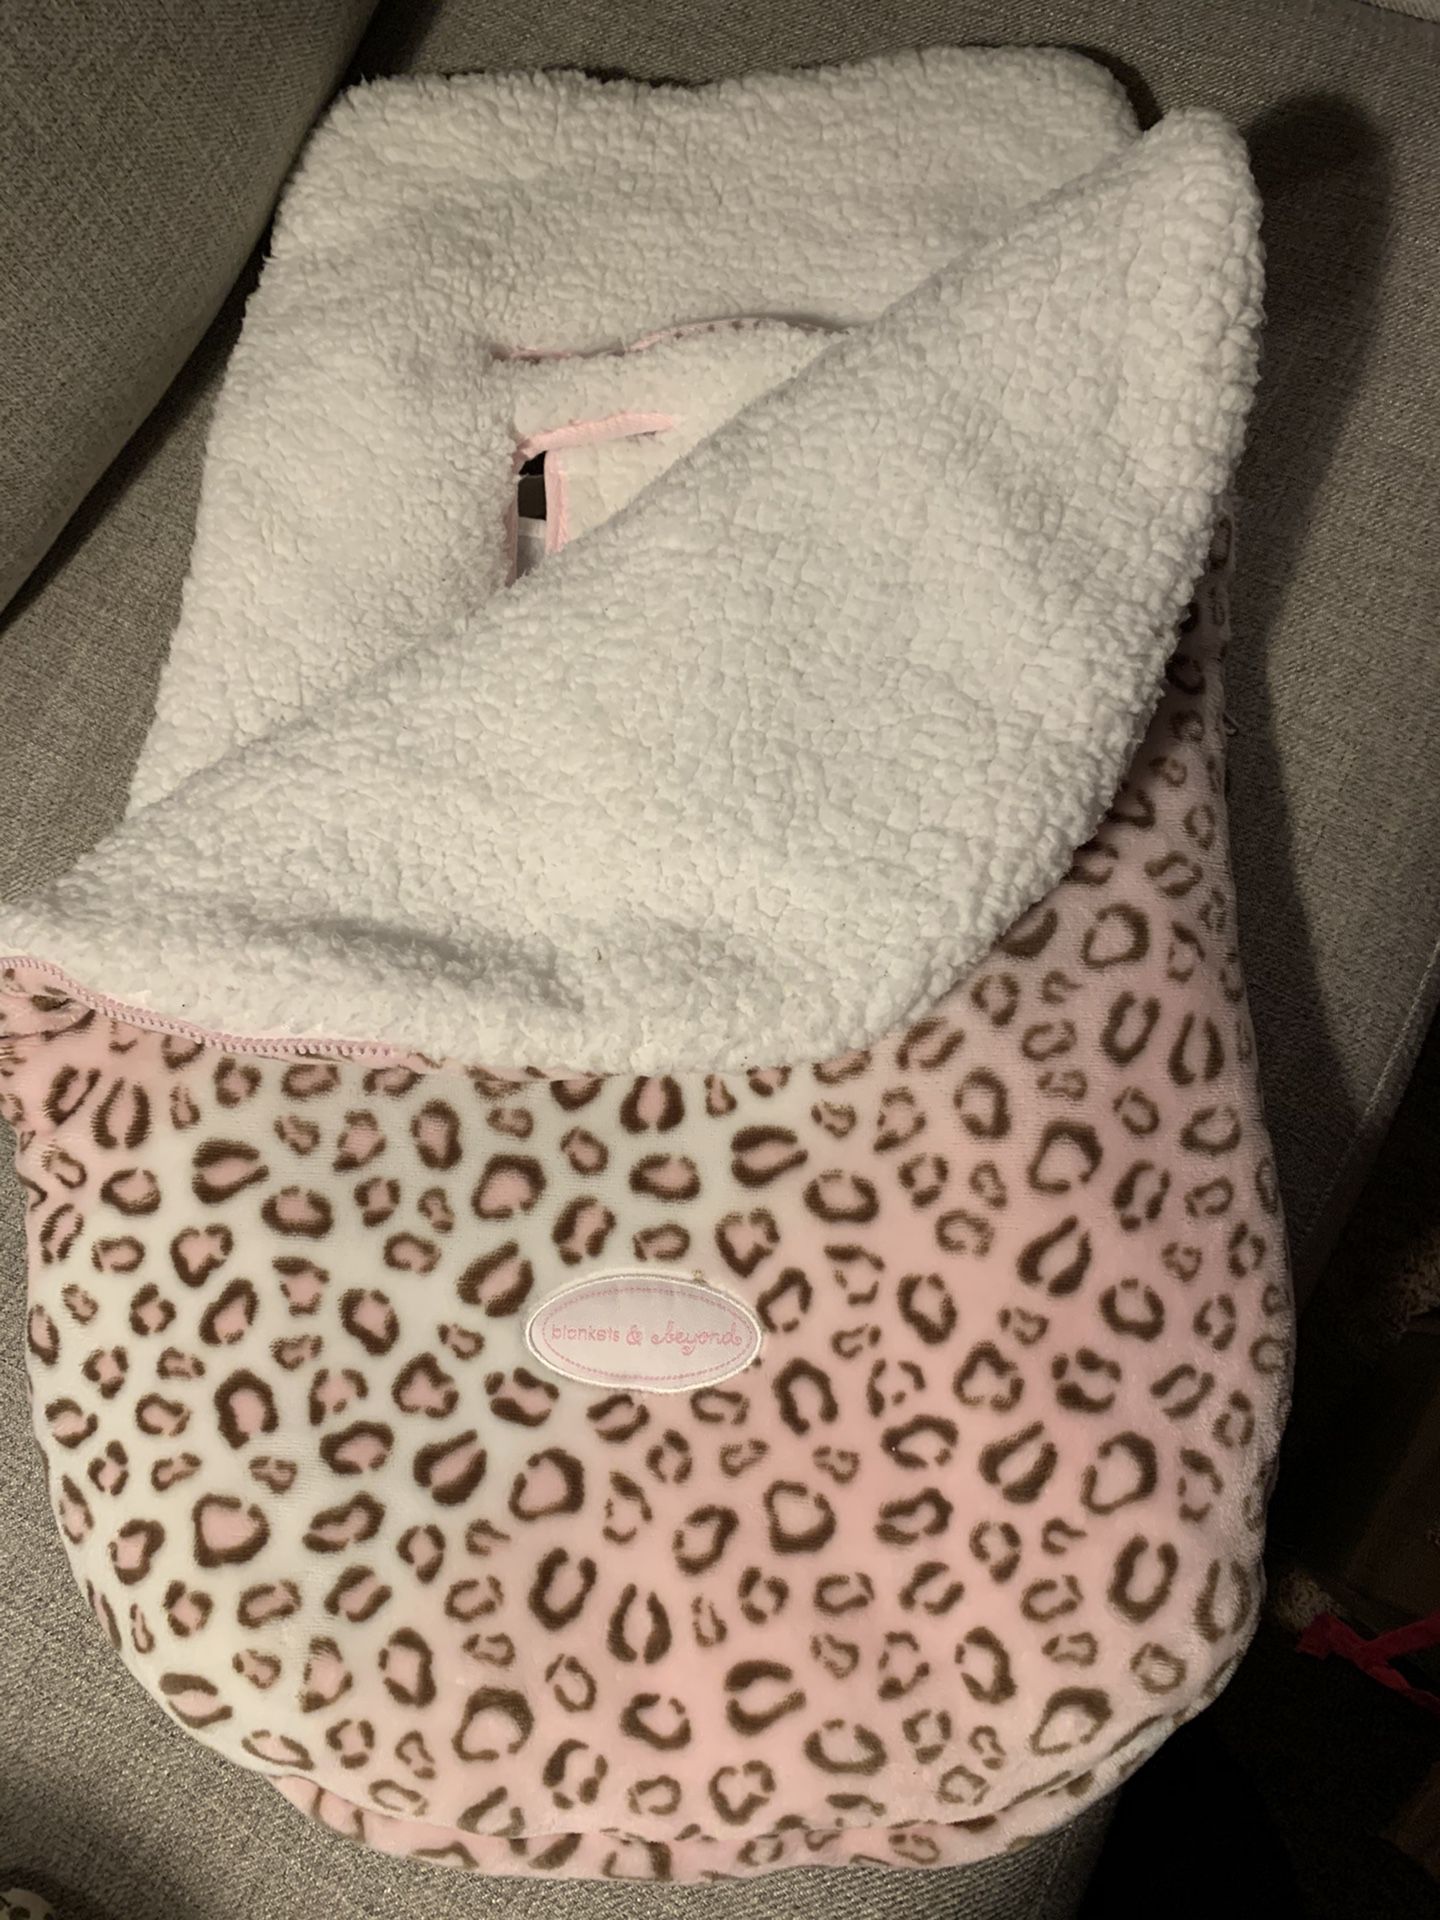 Infant Car Seat Snuggle Warm